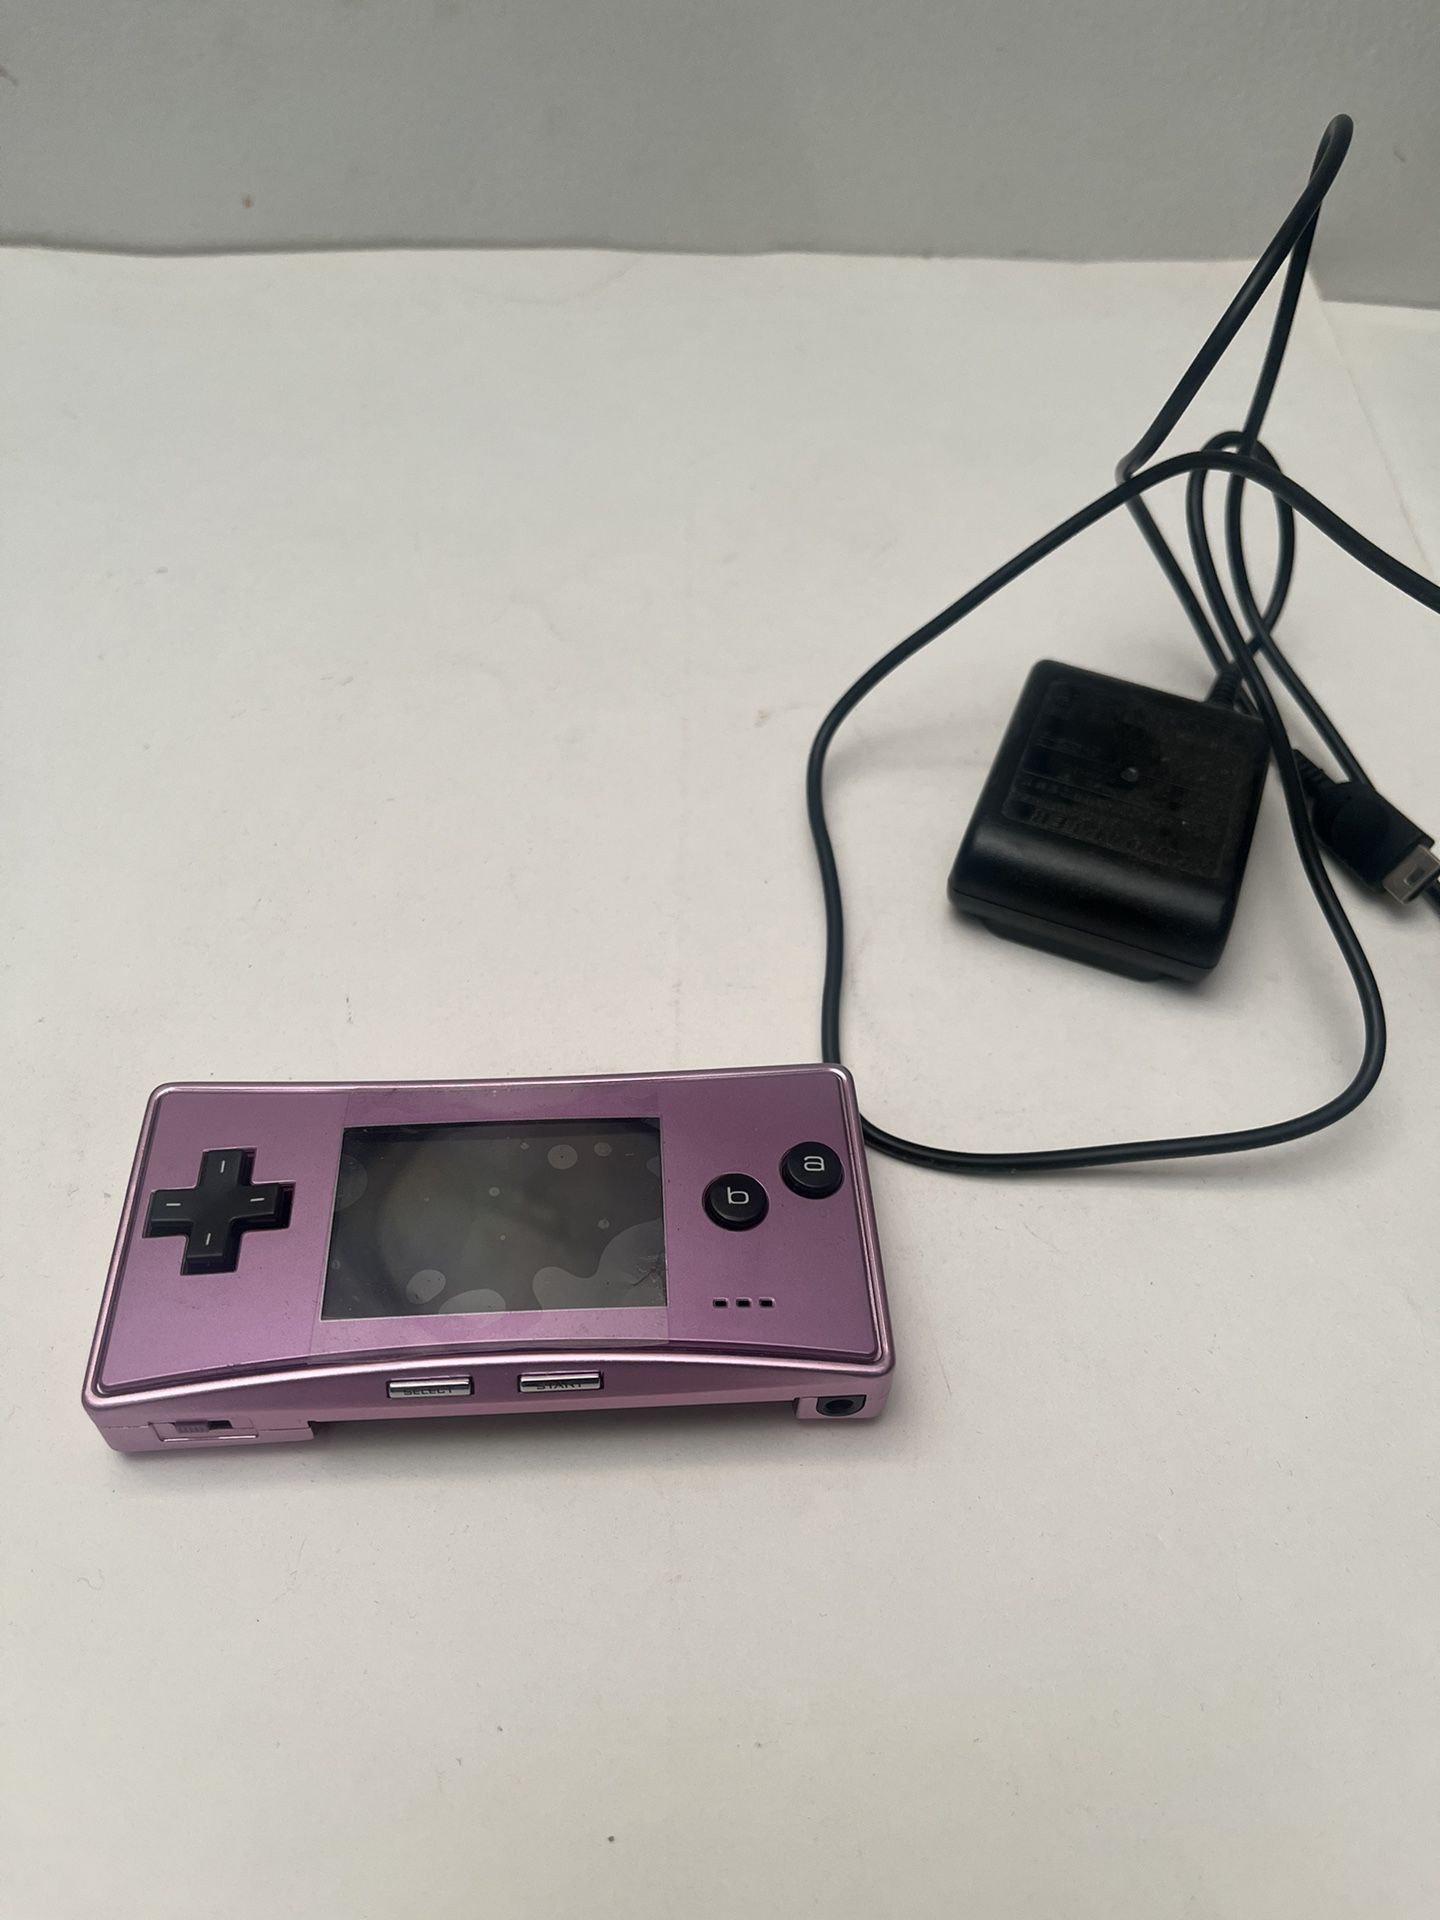 Gameboy Micro Pink